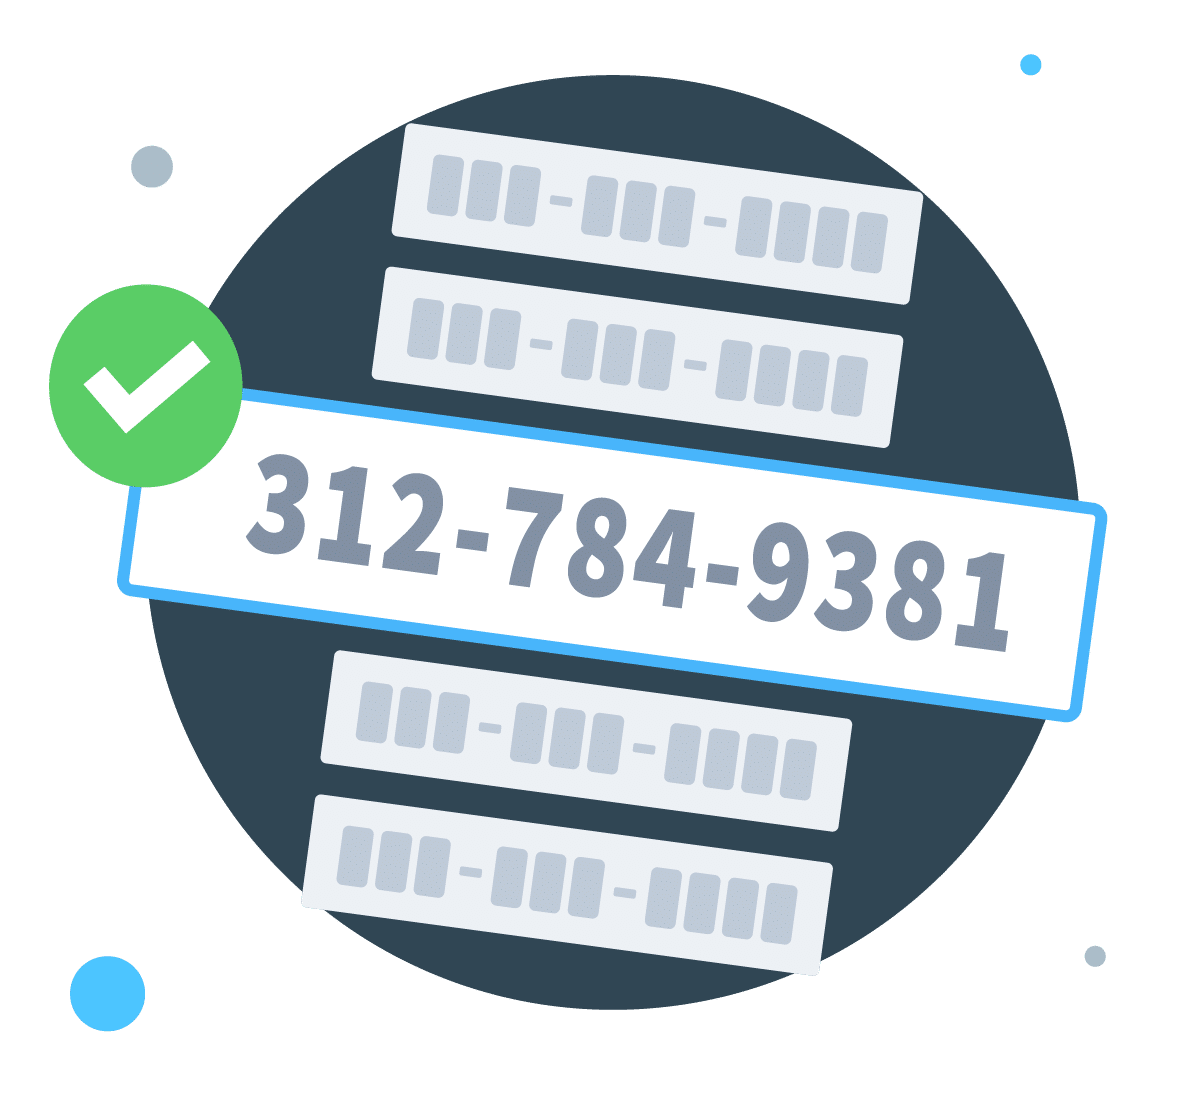 Buy Cheap Virtual Phone Numbers Online